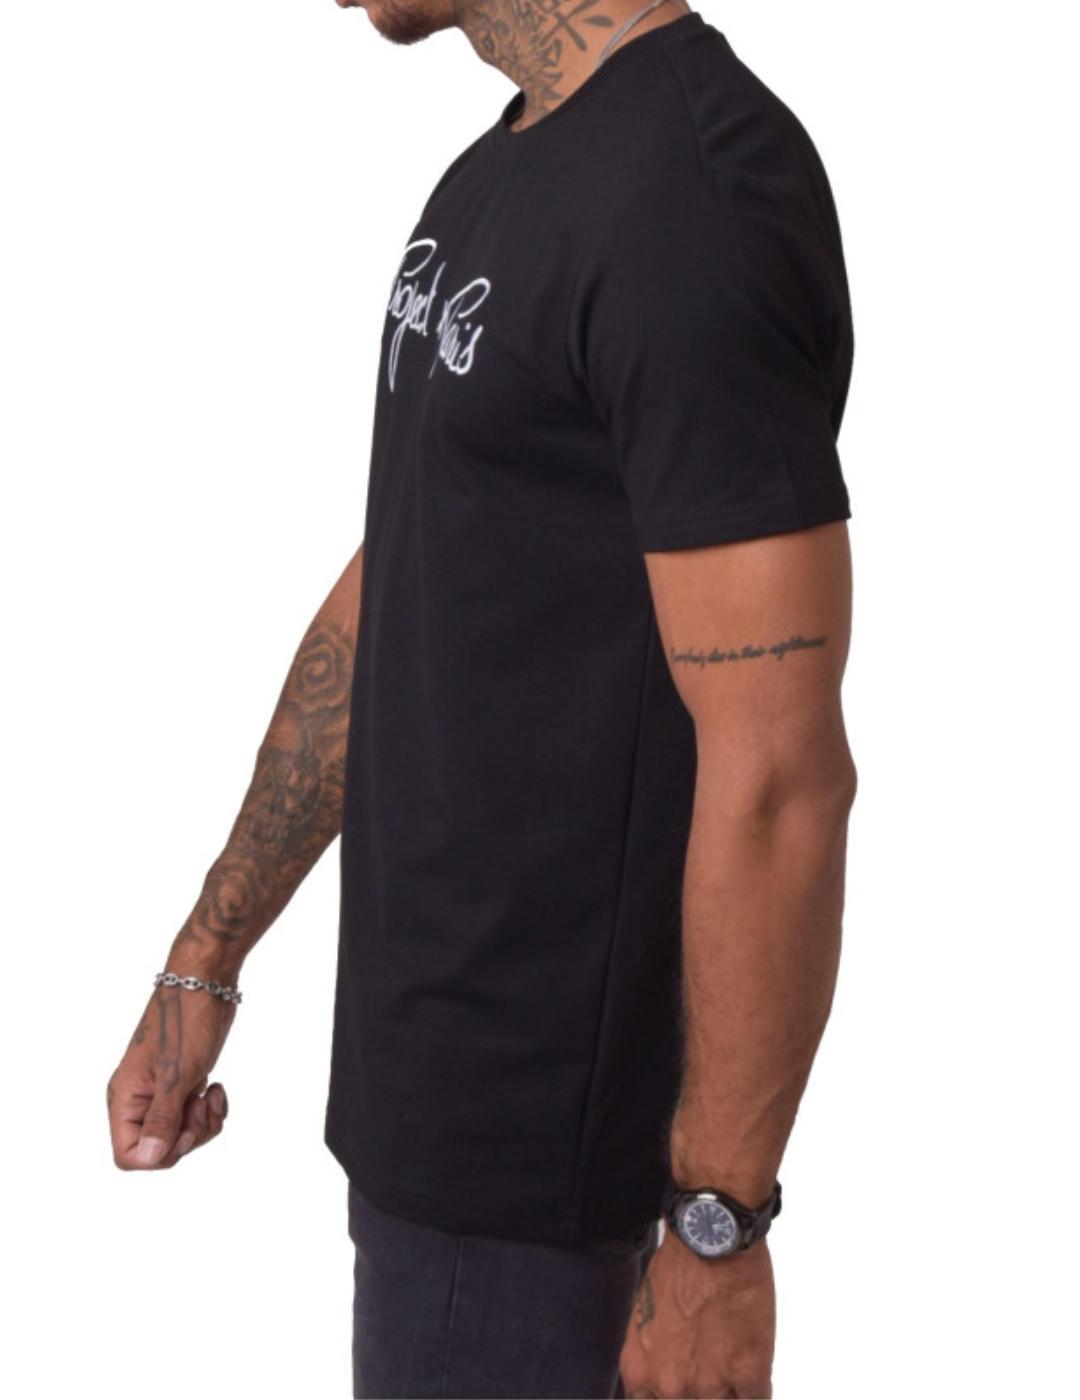 Camiseta ProjectxParis negra logo blanco manga corta unisex